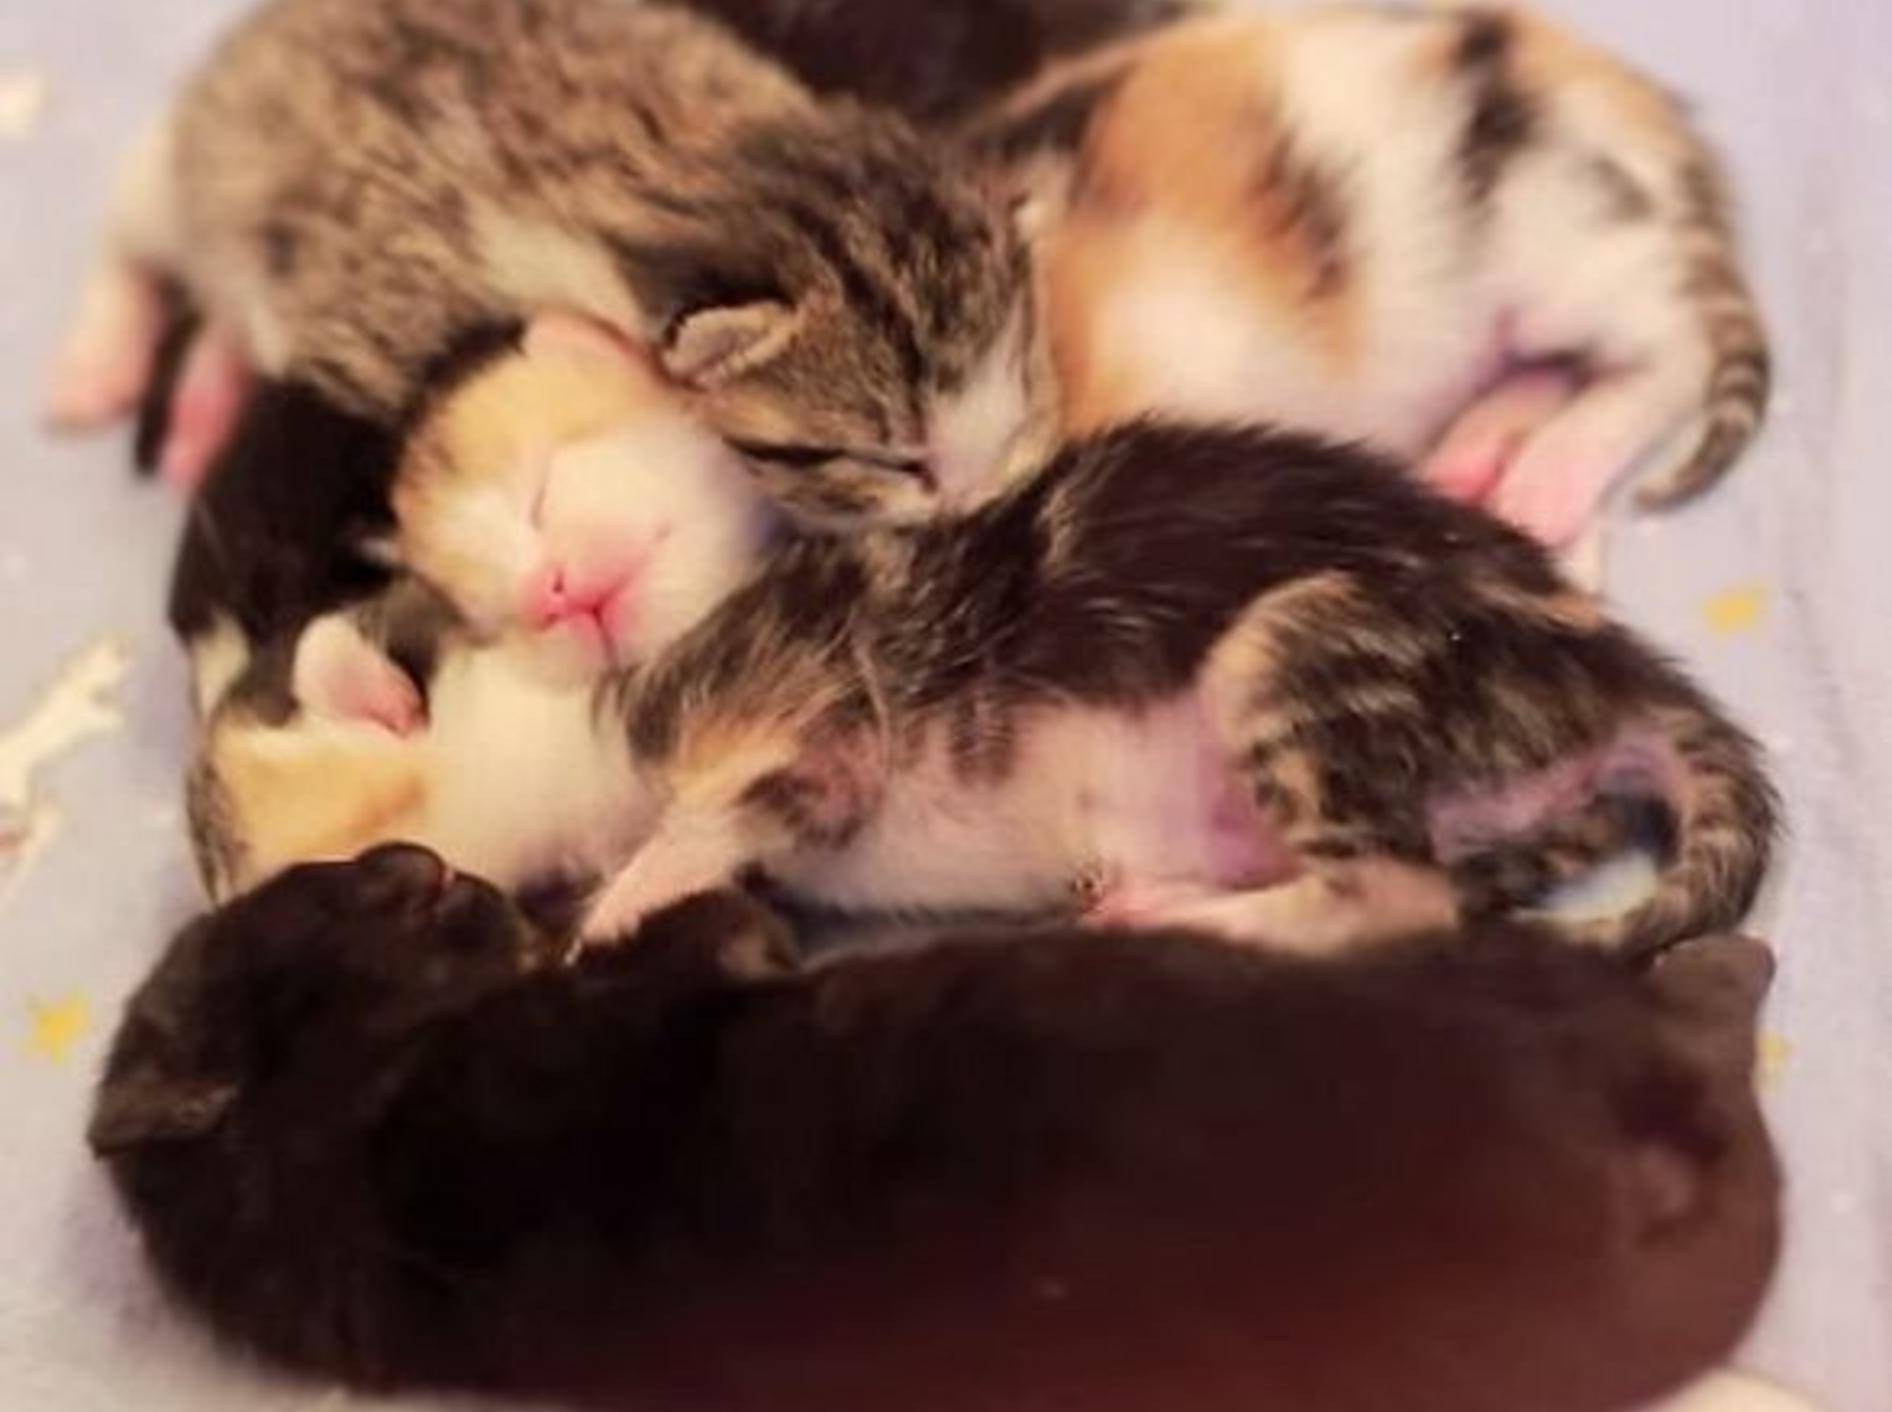 Katzenpflegestation zeigt süße Neuzugänge – Bild: Youtube / CARE - Cat Adoption & Rescue Efforts, Inc